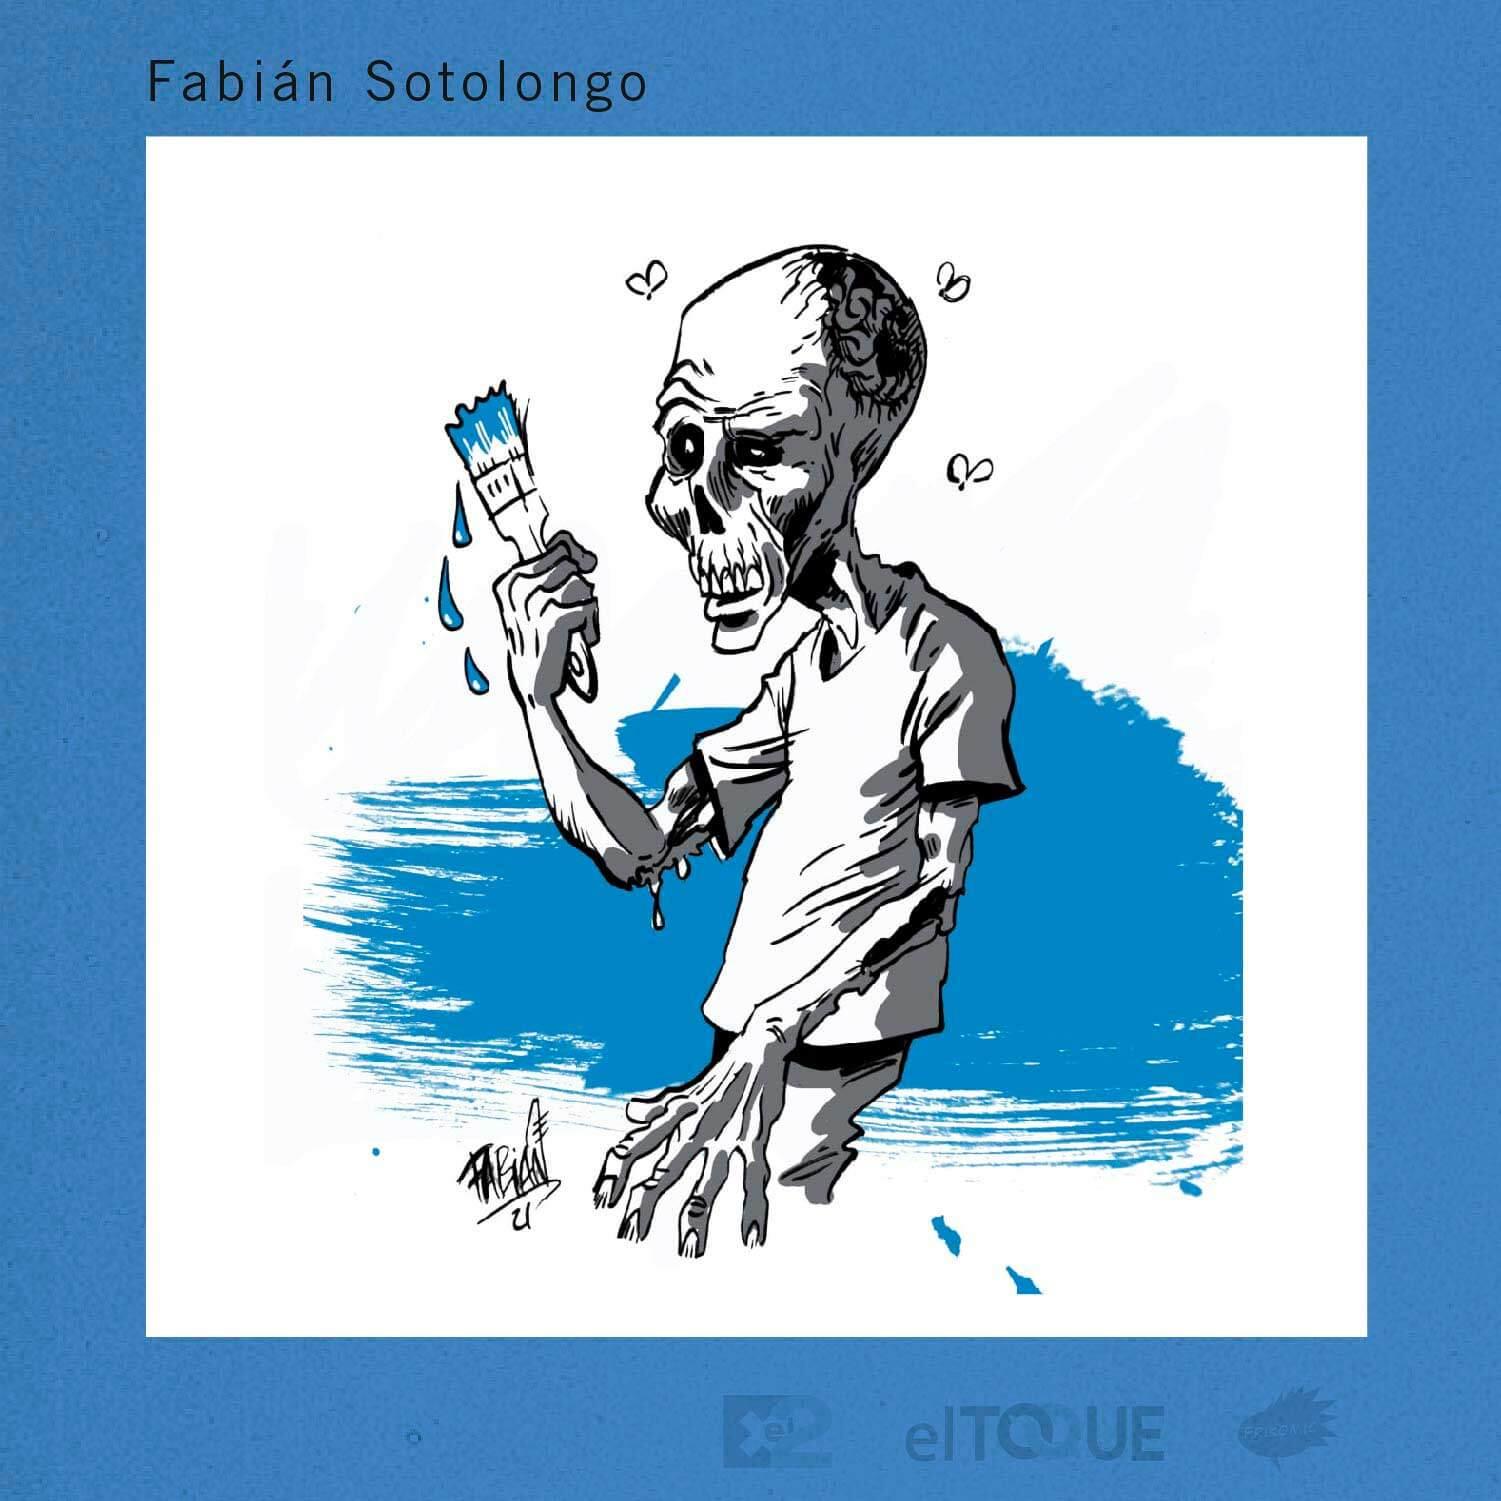 21-02-28-Sotolongo-Fabian-AZUL-REPUDIO-ACTOS-DE-REPUDIO-CUBA.jpg